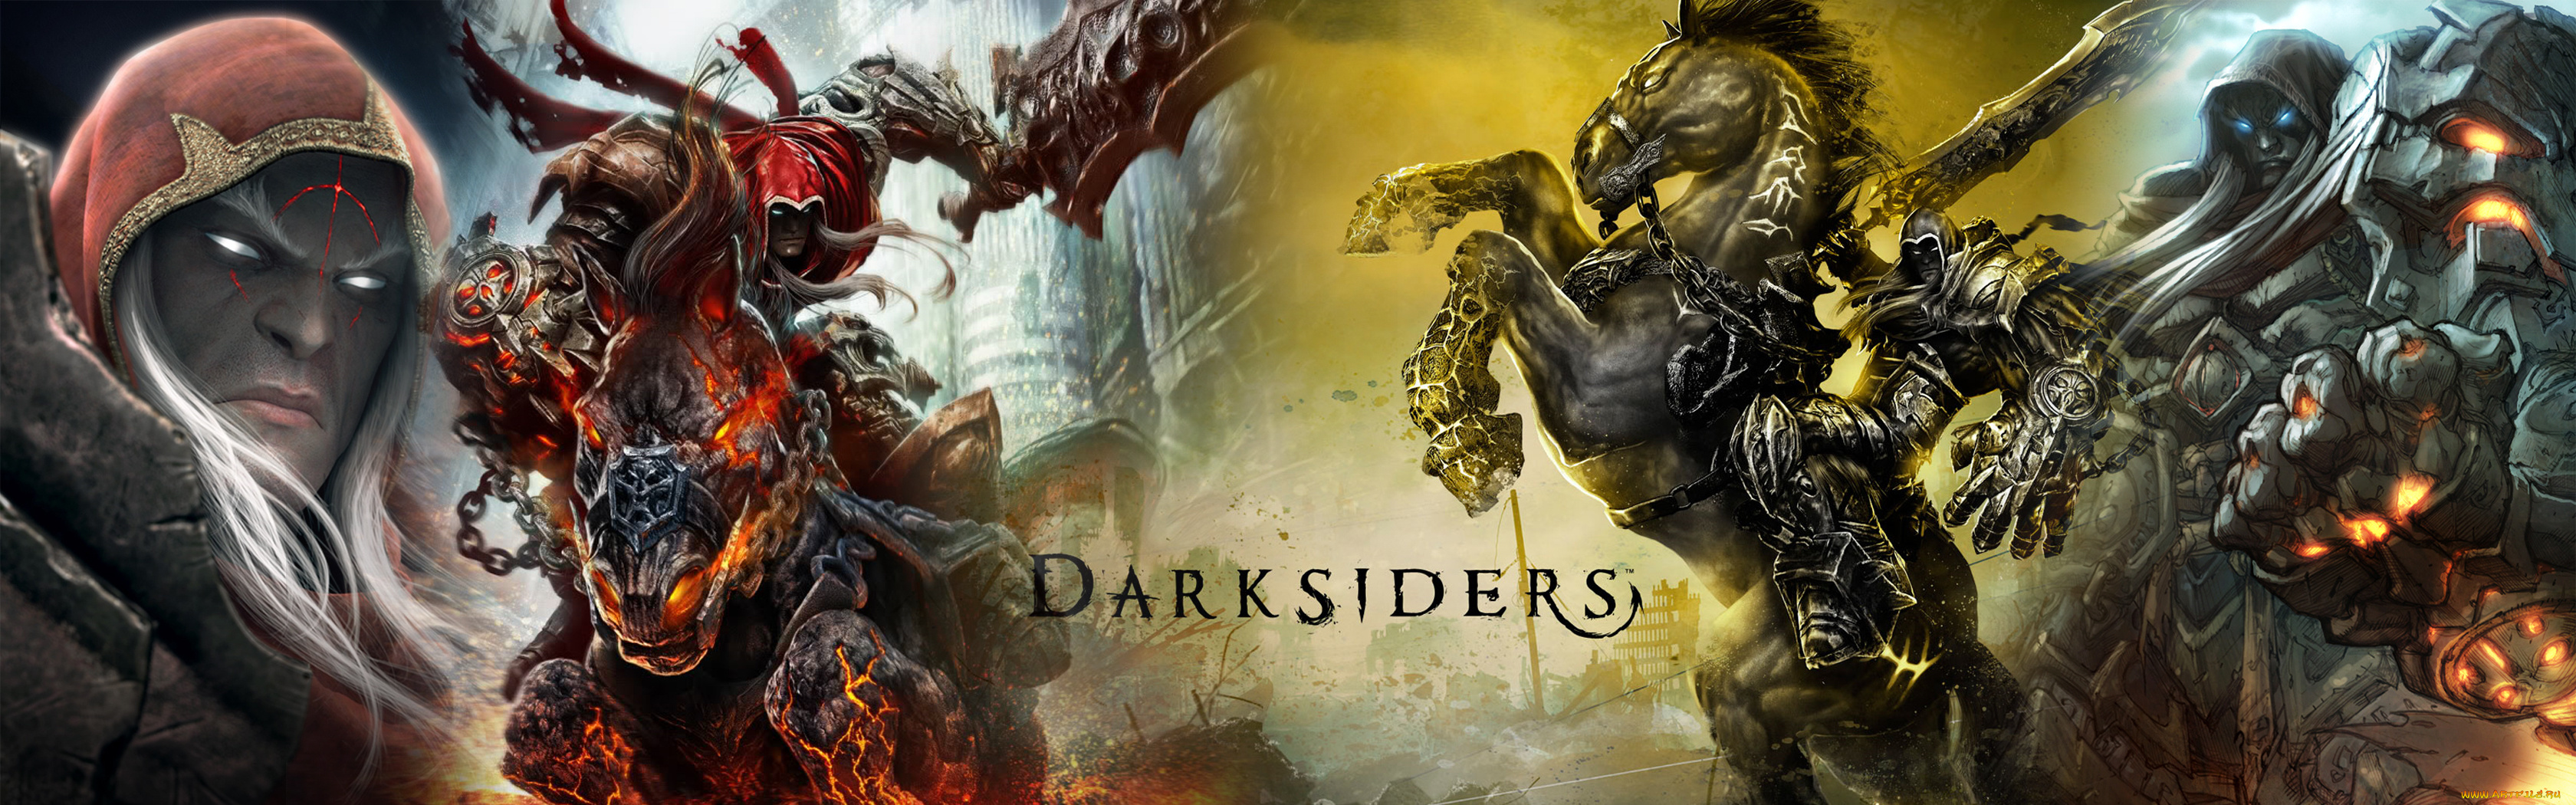 darksiders, видео, игры, wrath, of, war, игра